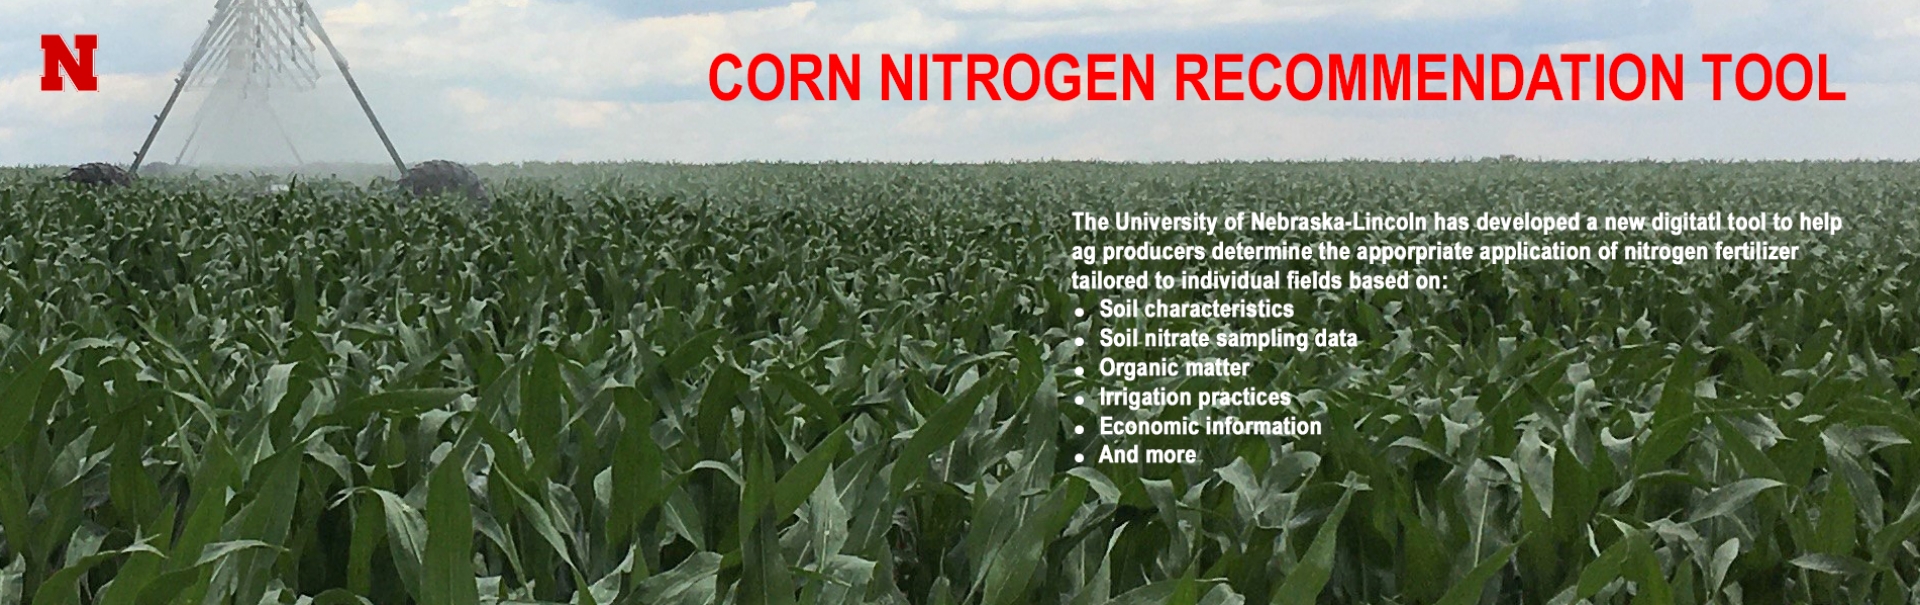 Corn Nitrogen Recommendation Tool